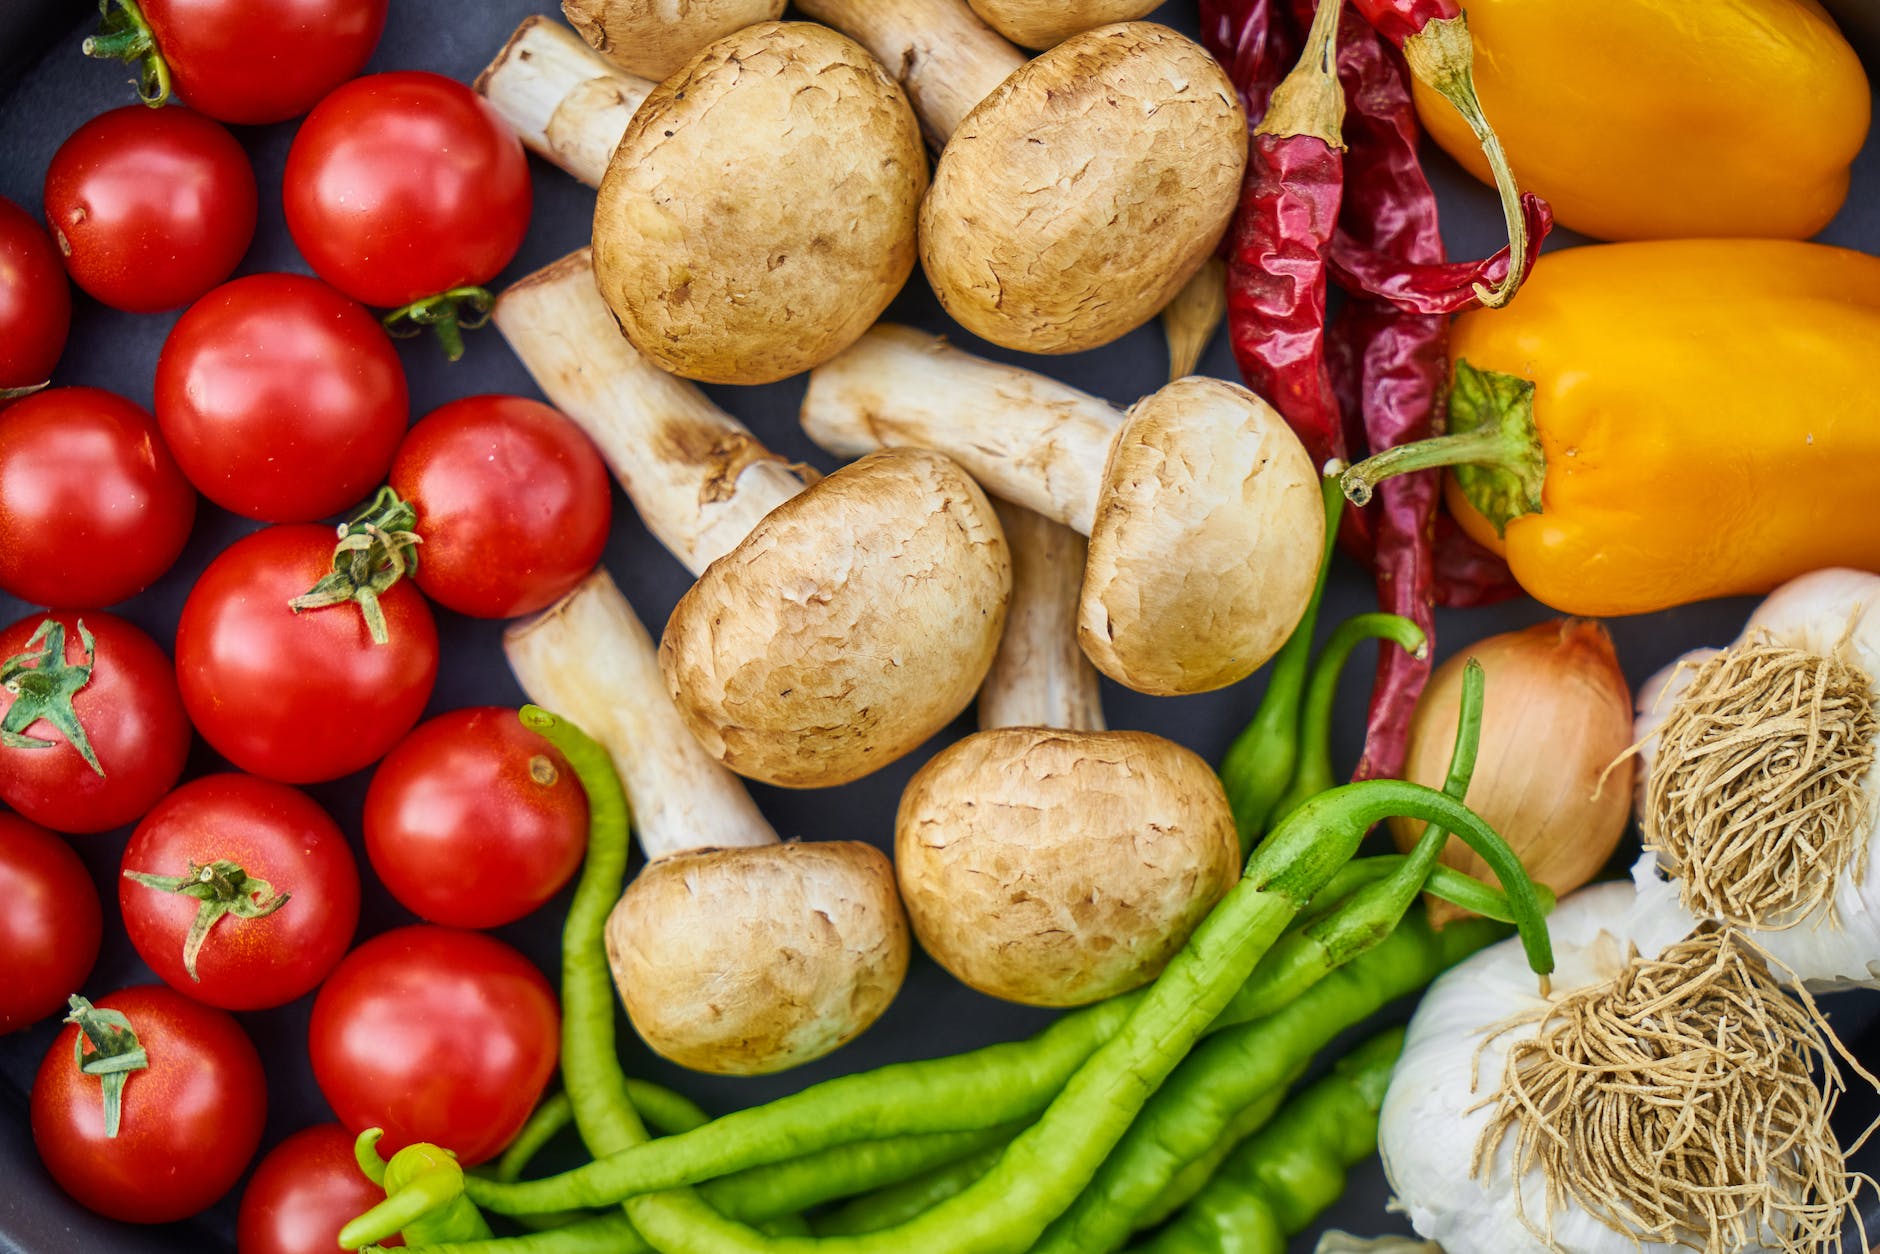 Nutritional vegetables for optimal health